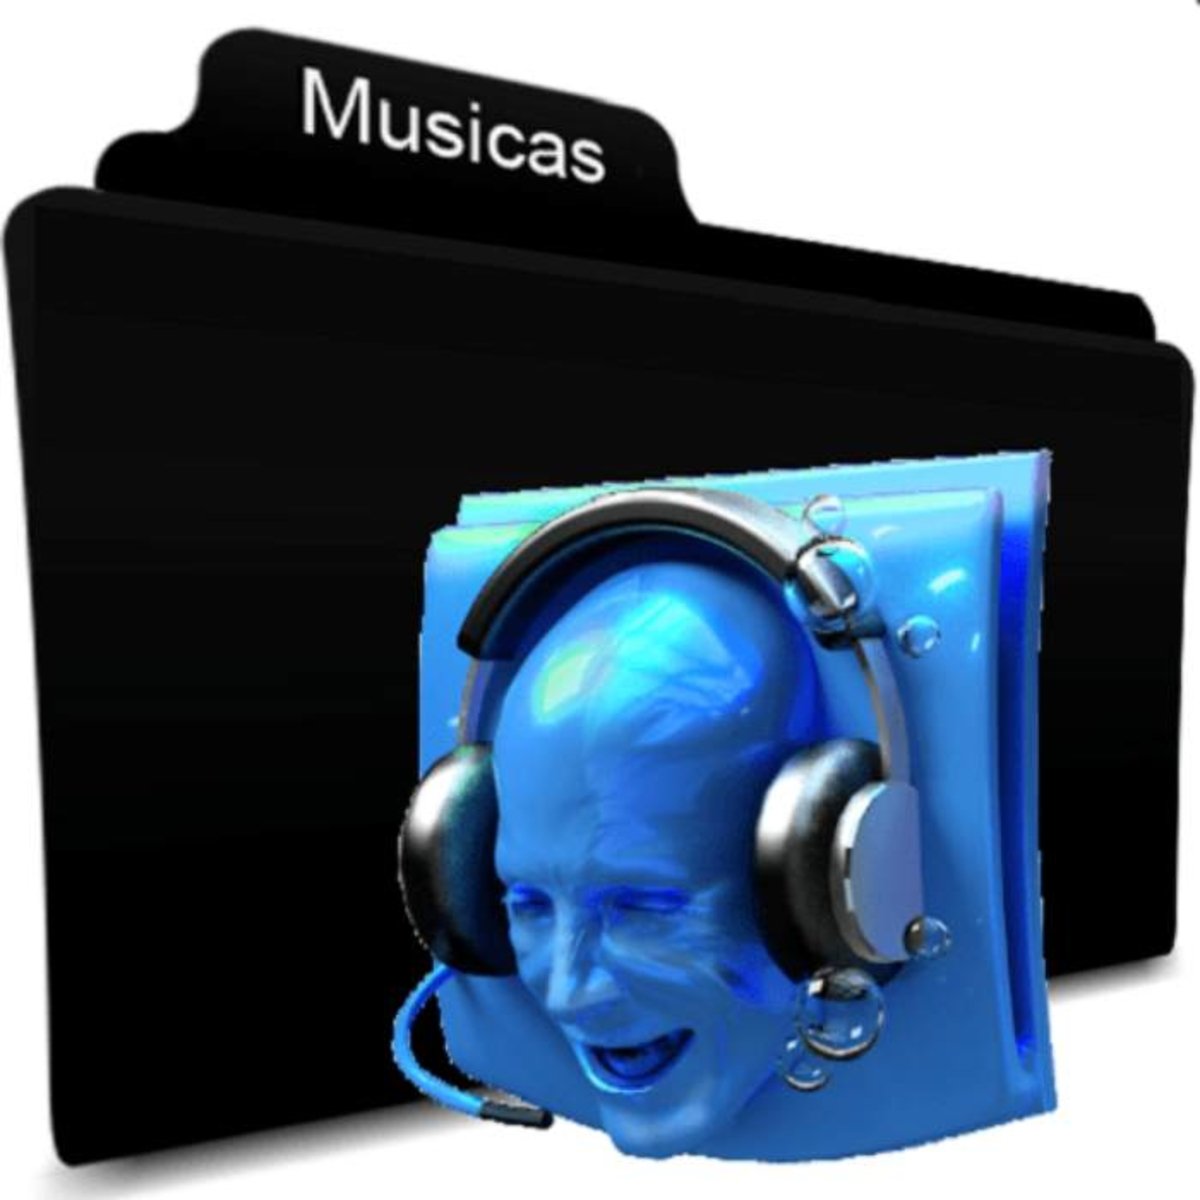 JamMusic Jam Music downloader